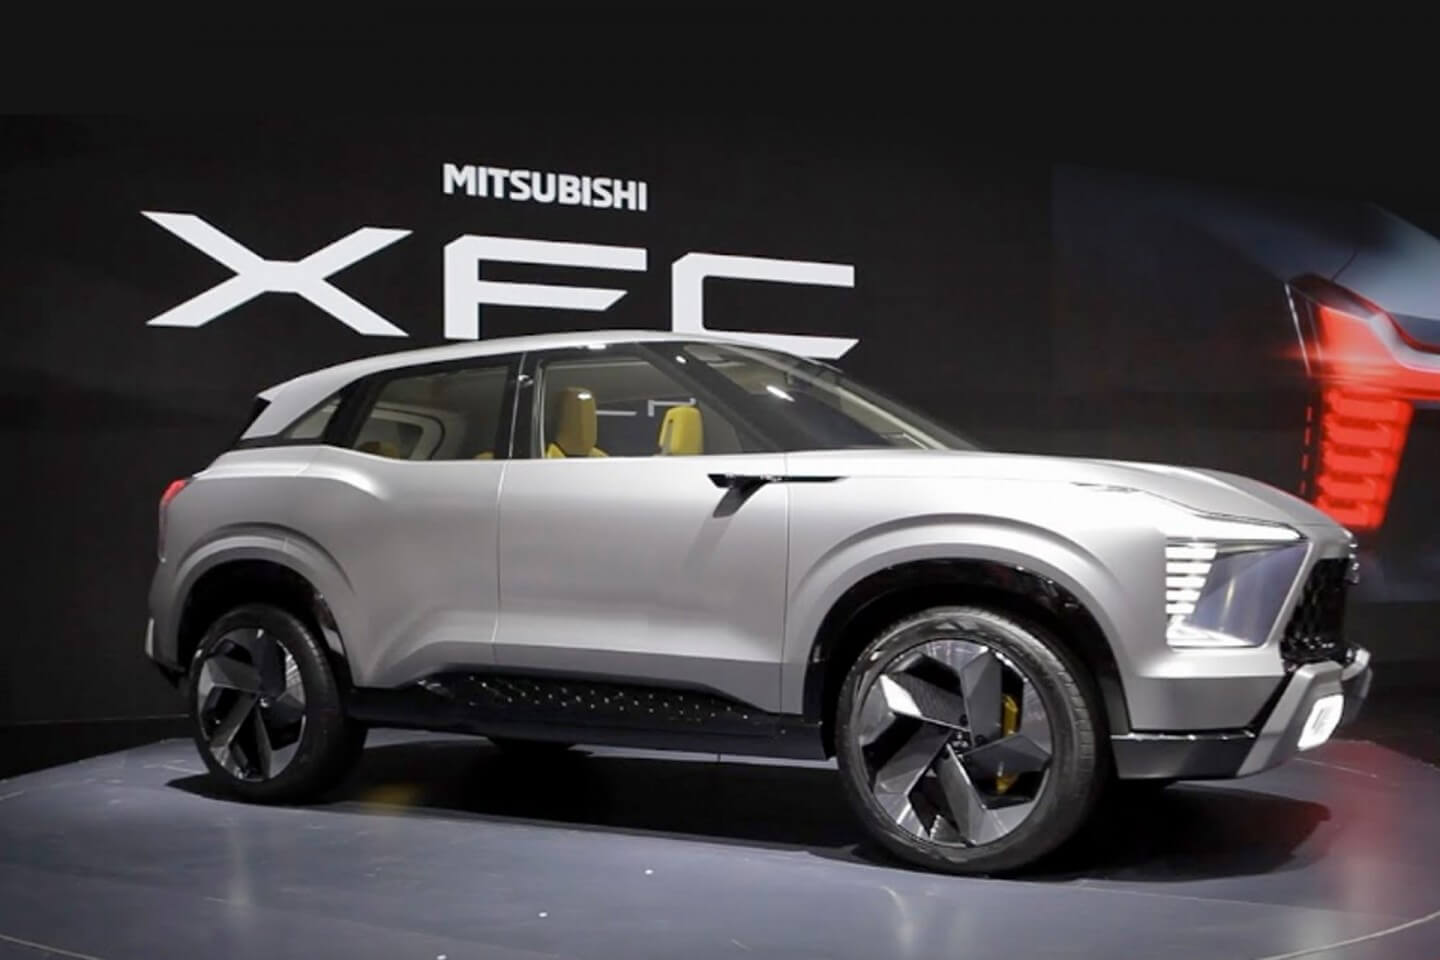 Bocoran Spesifikasi Mitsubishi XFC Yang Bakal Dirilis